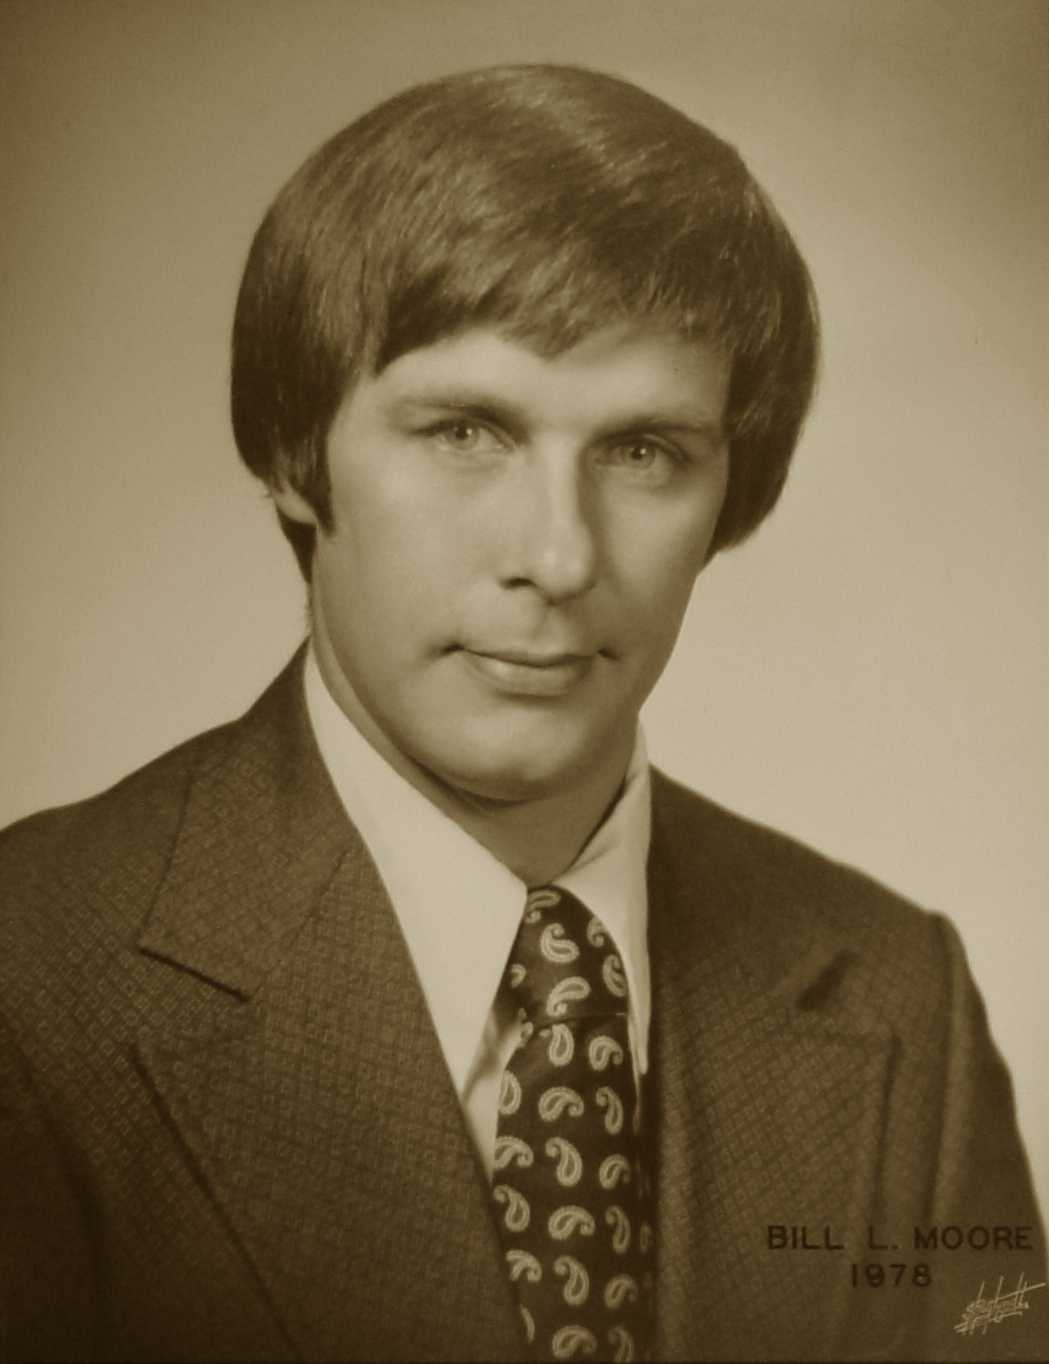 Bill L. Moore, 1978